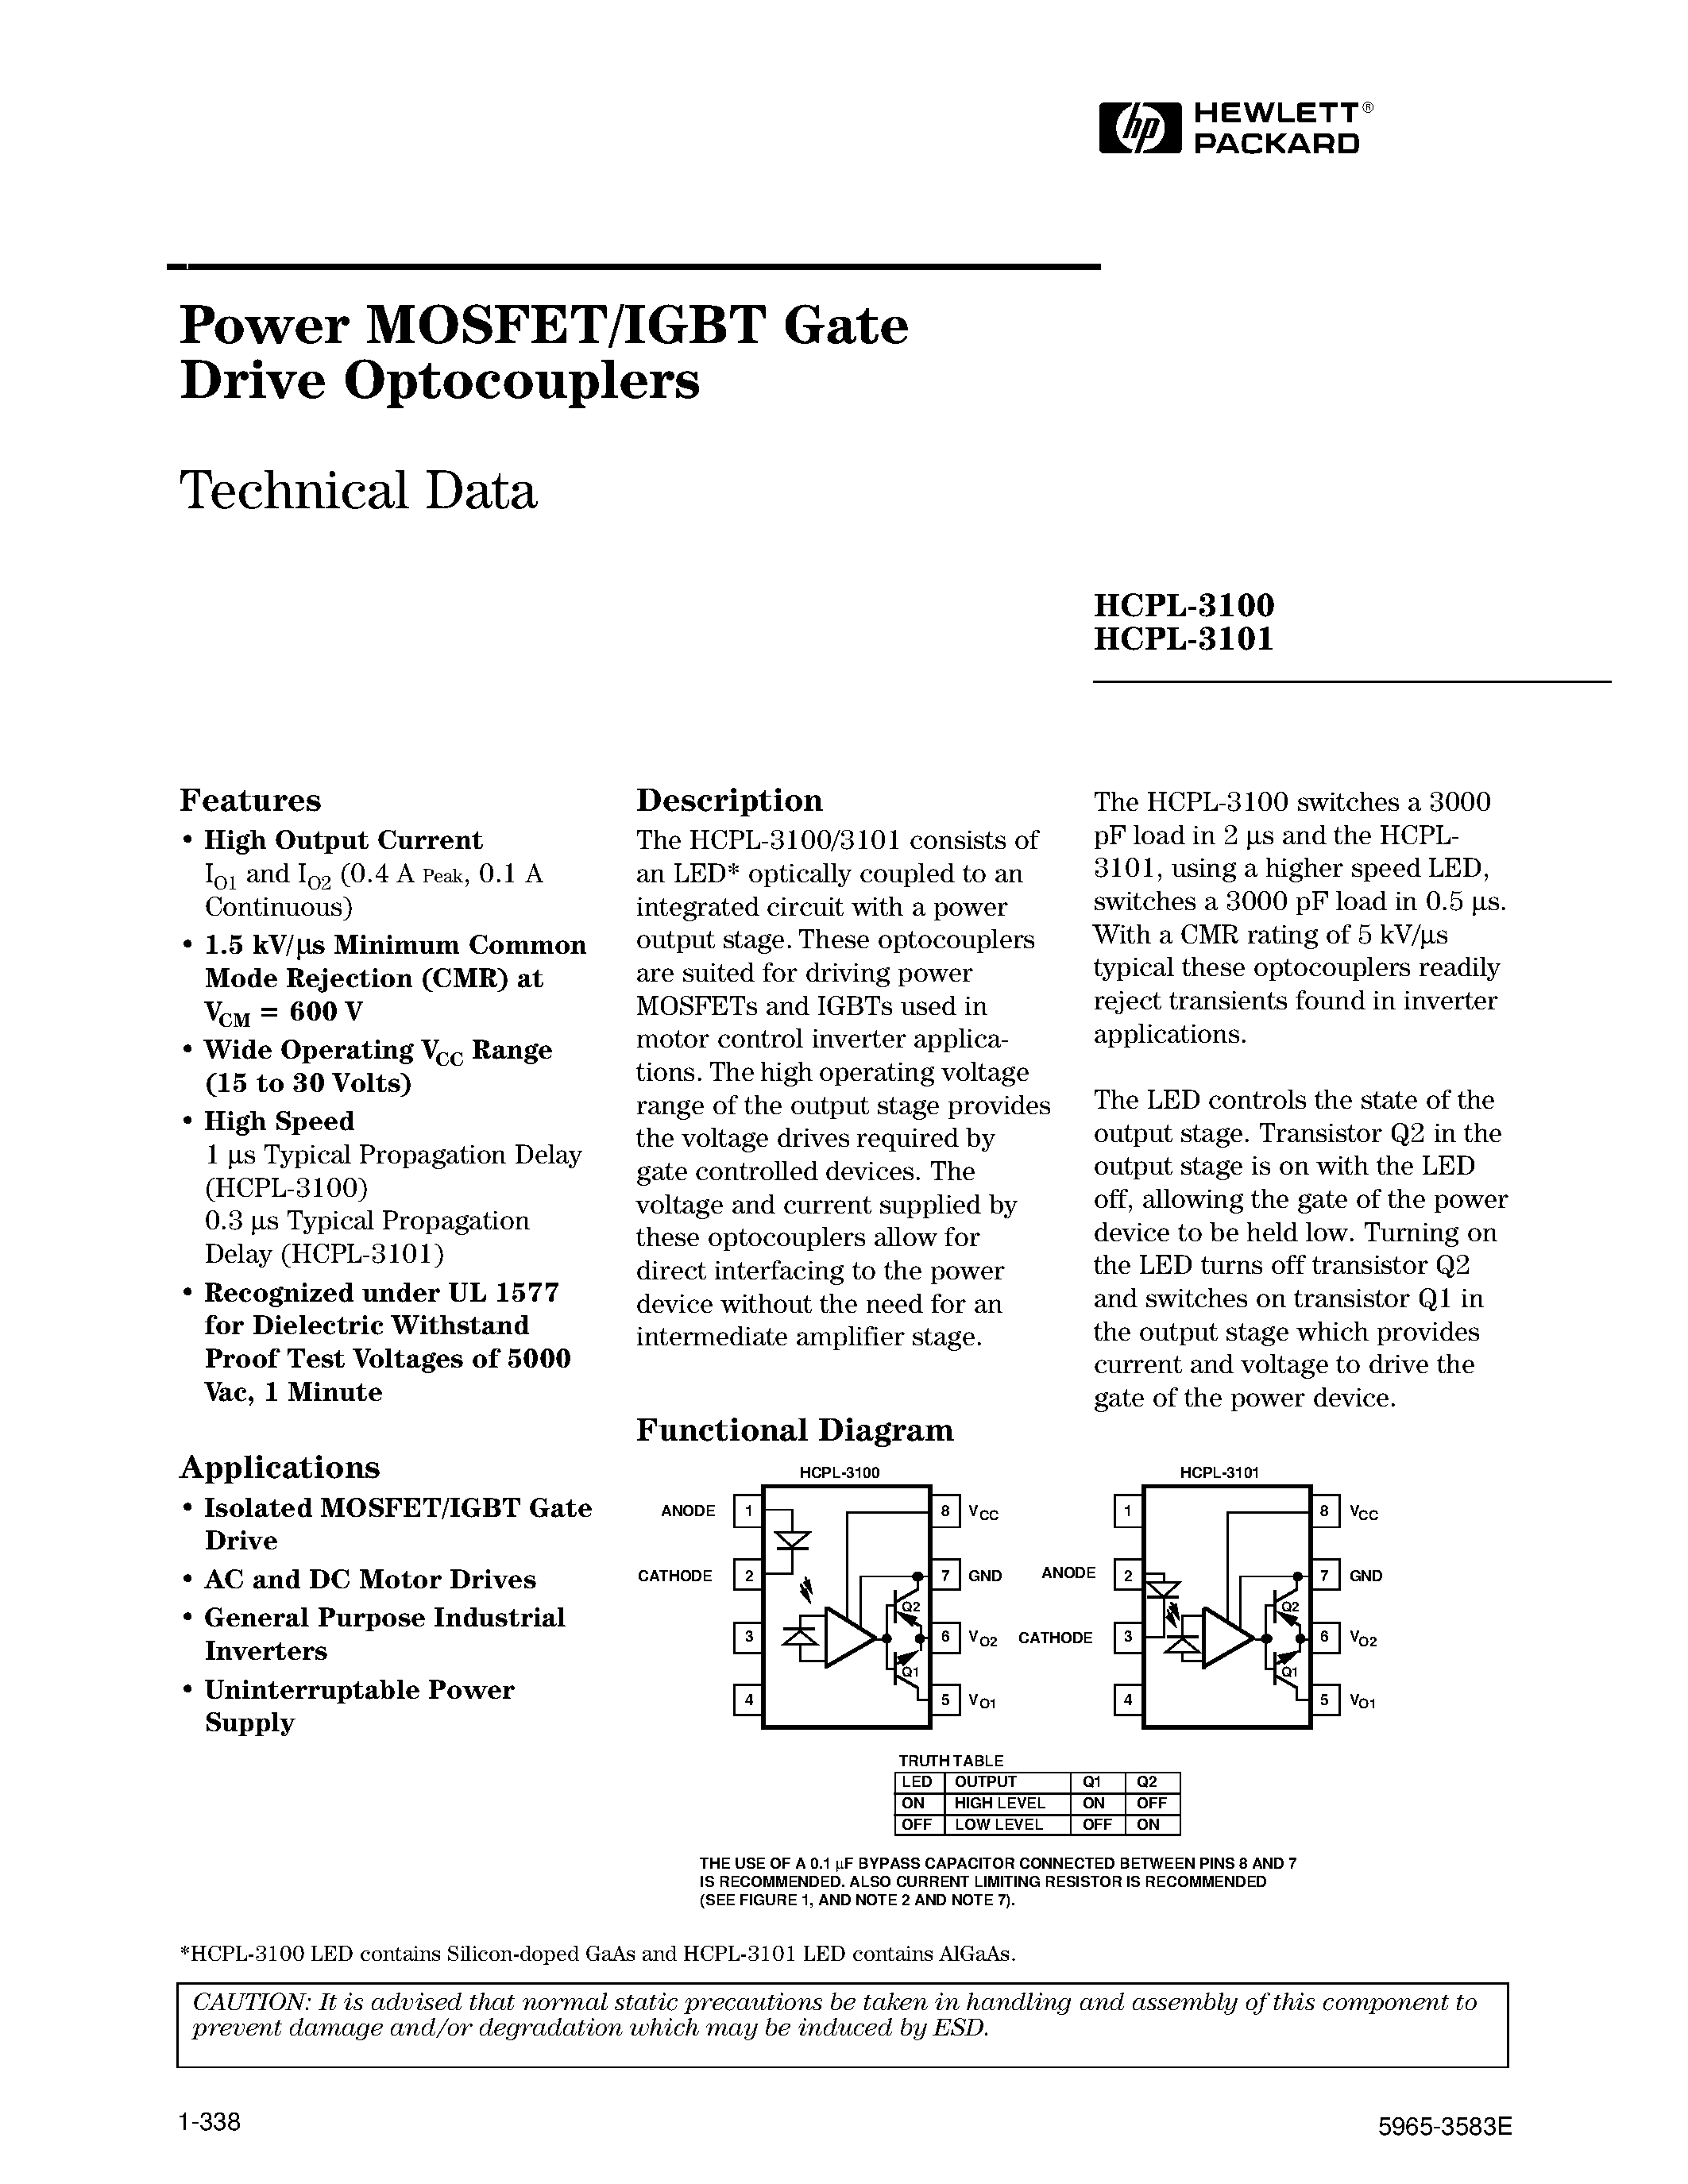 Даташит HCPL-3101 - Power MOSFET/IGBT Gate Drive Optocouplers страница 1